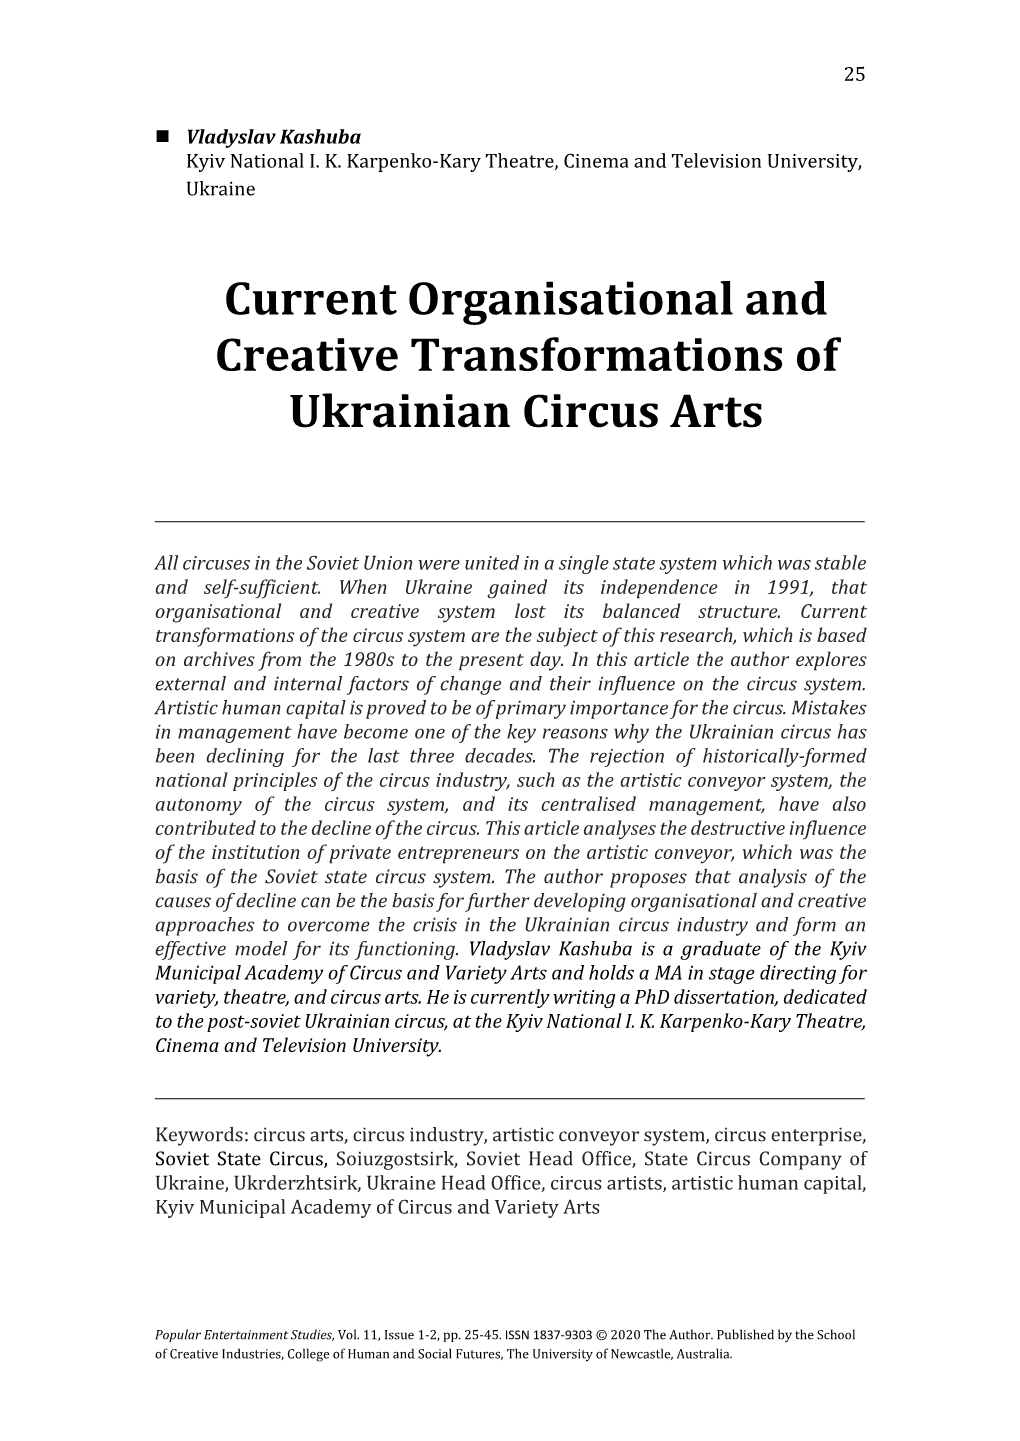 Current Organisational and Creative Transformations of Ukrainian Circus Arts